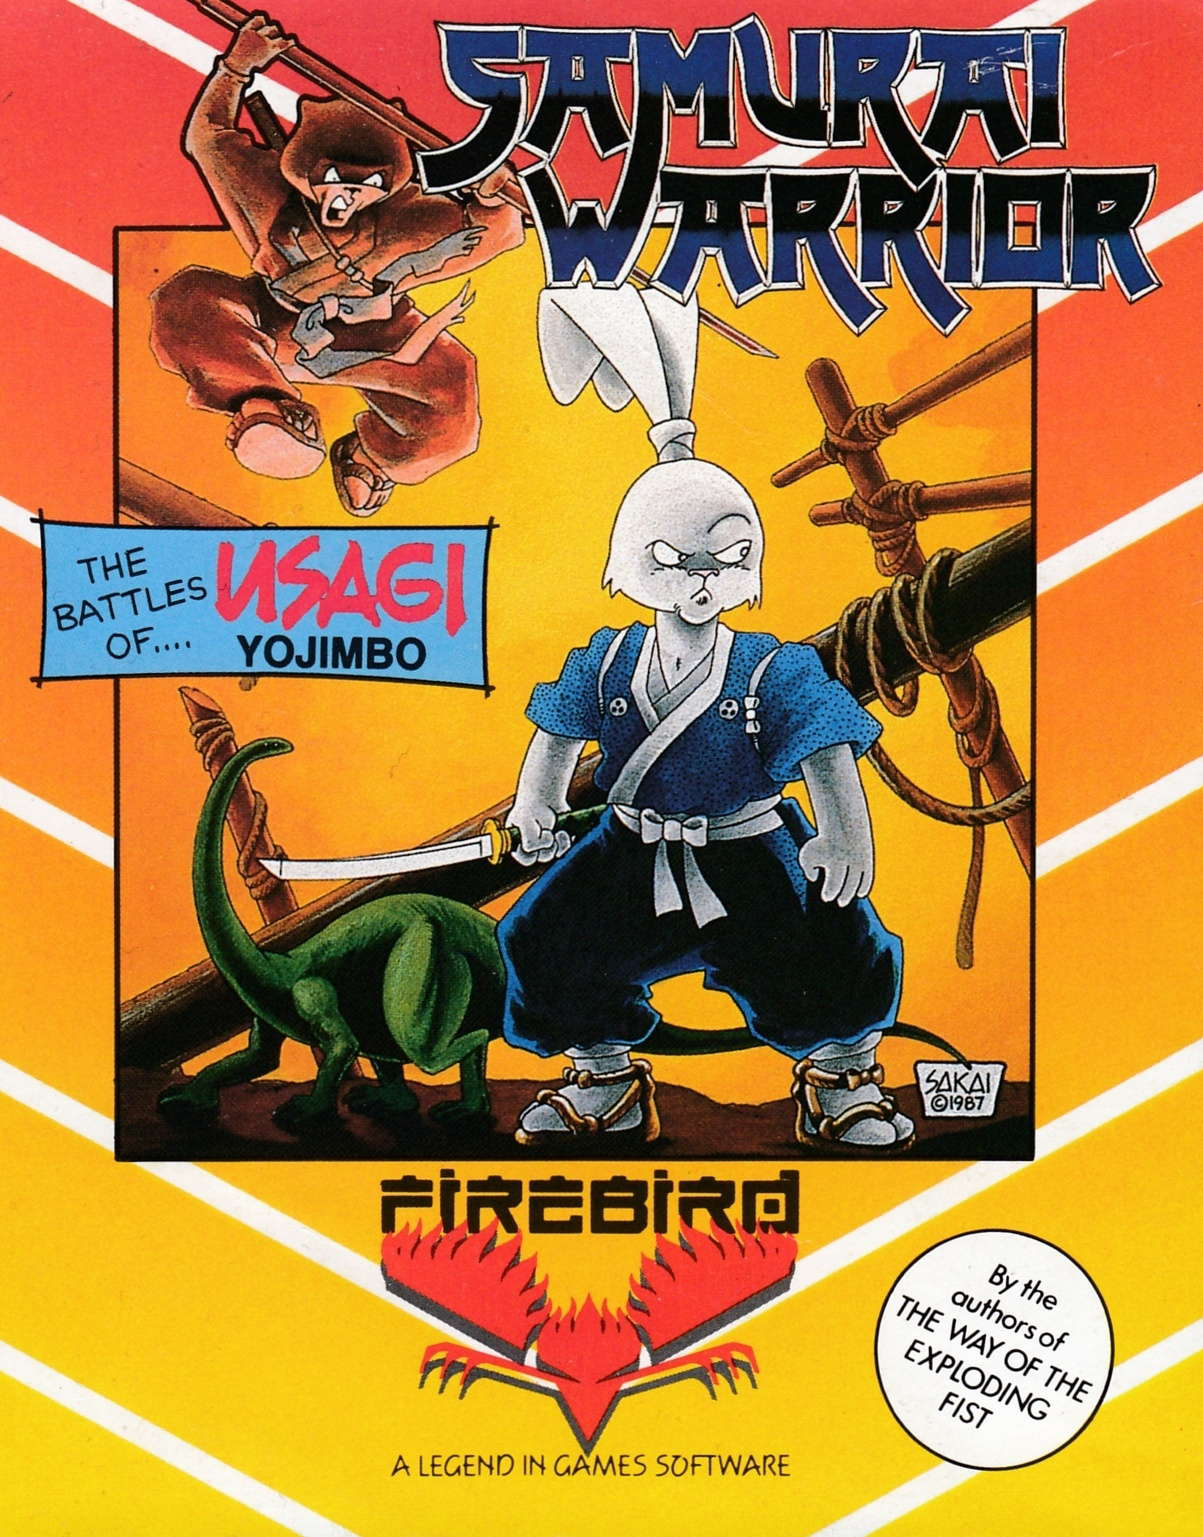 cover of the Amstrad CPC game Usagi Yojimbo  by GameBase CPC